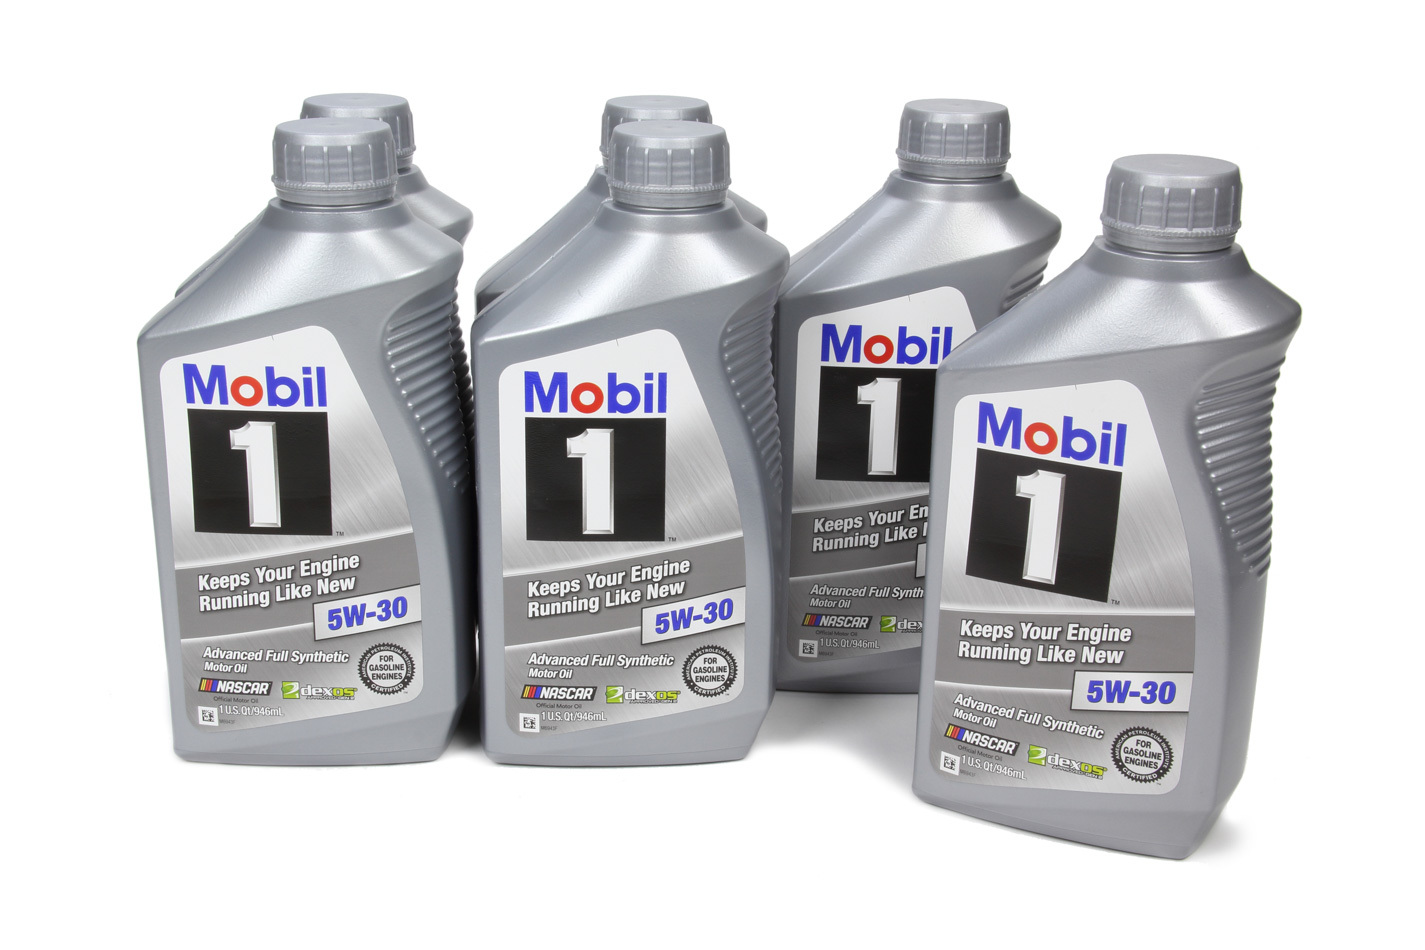 MOBIL 1 Motor Oil Advanced Full Synthetic 5W30 Synthetic 1 qt Bottle Set of 6